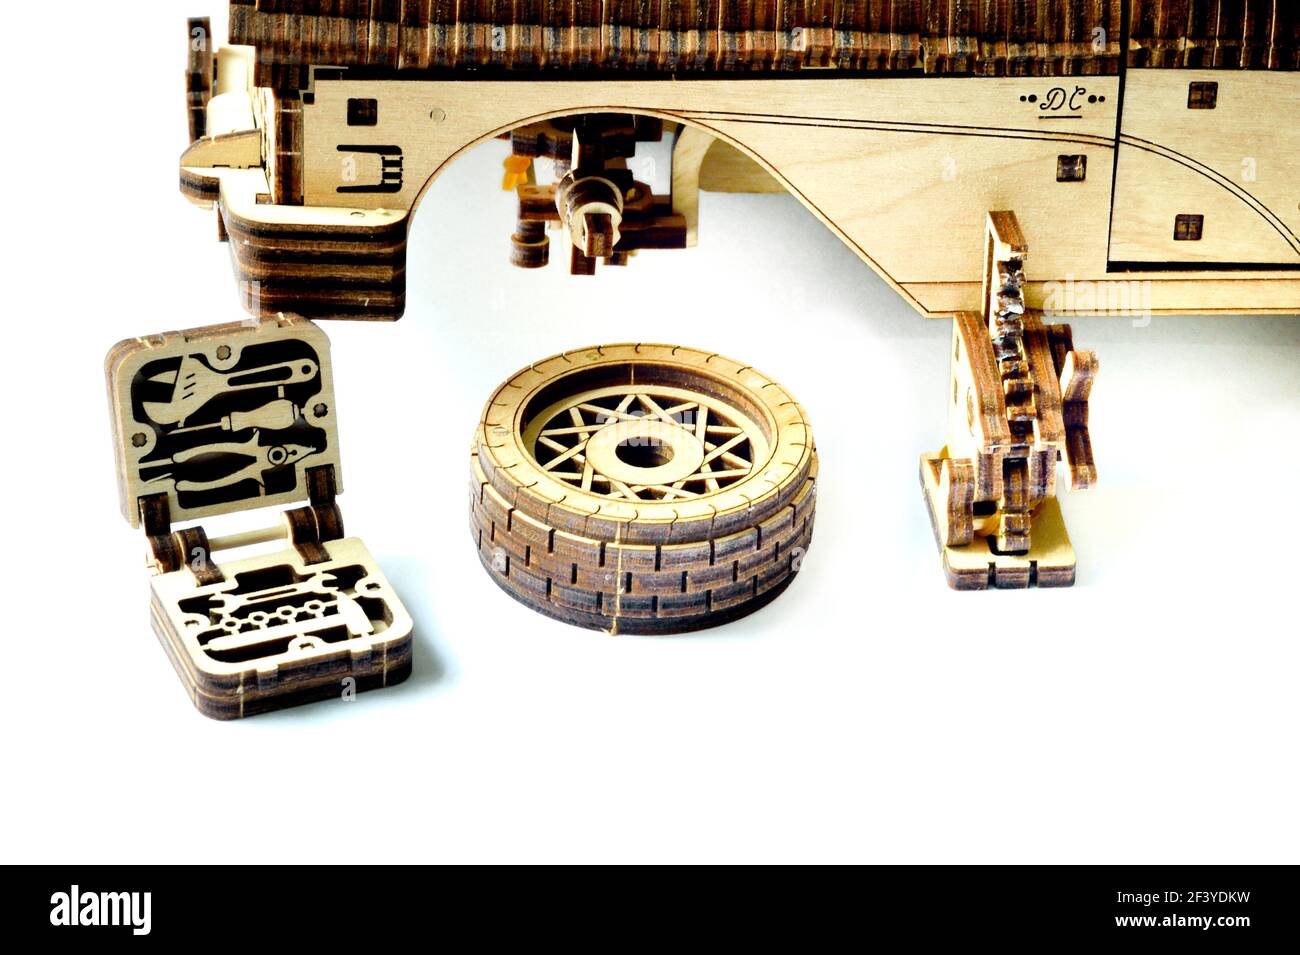 Wooden model car depicting breakdown scenes Stock Photo